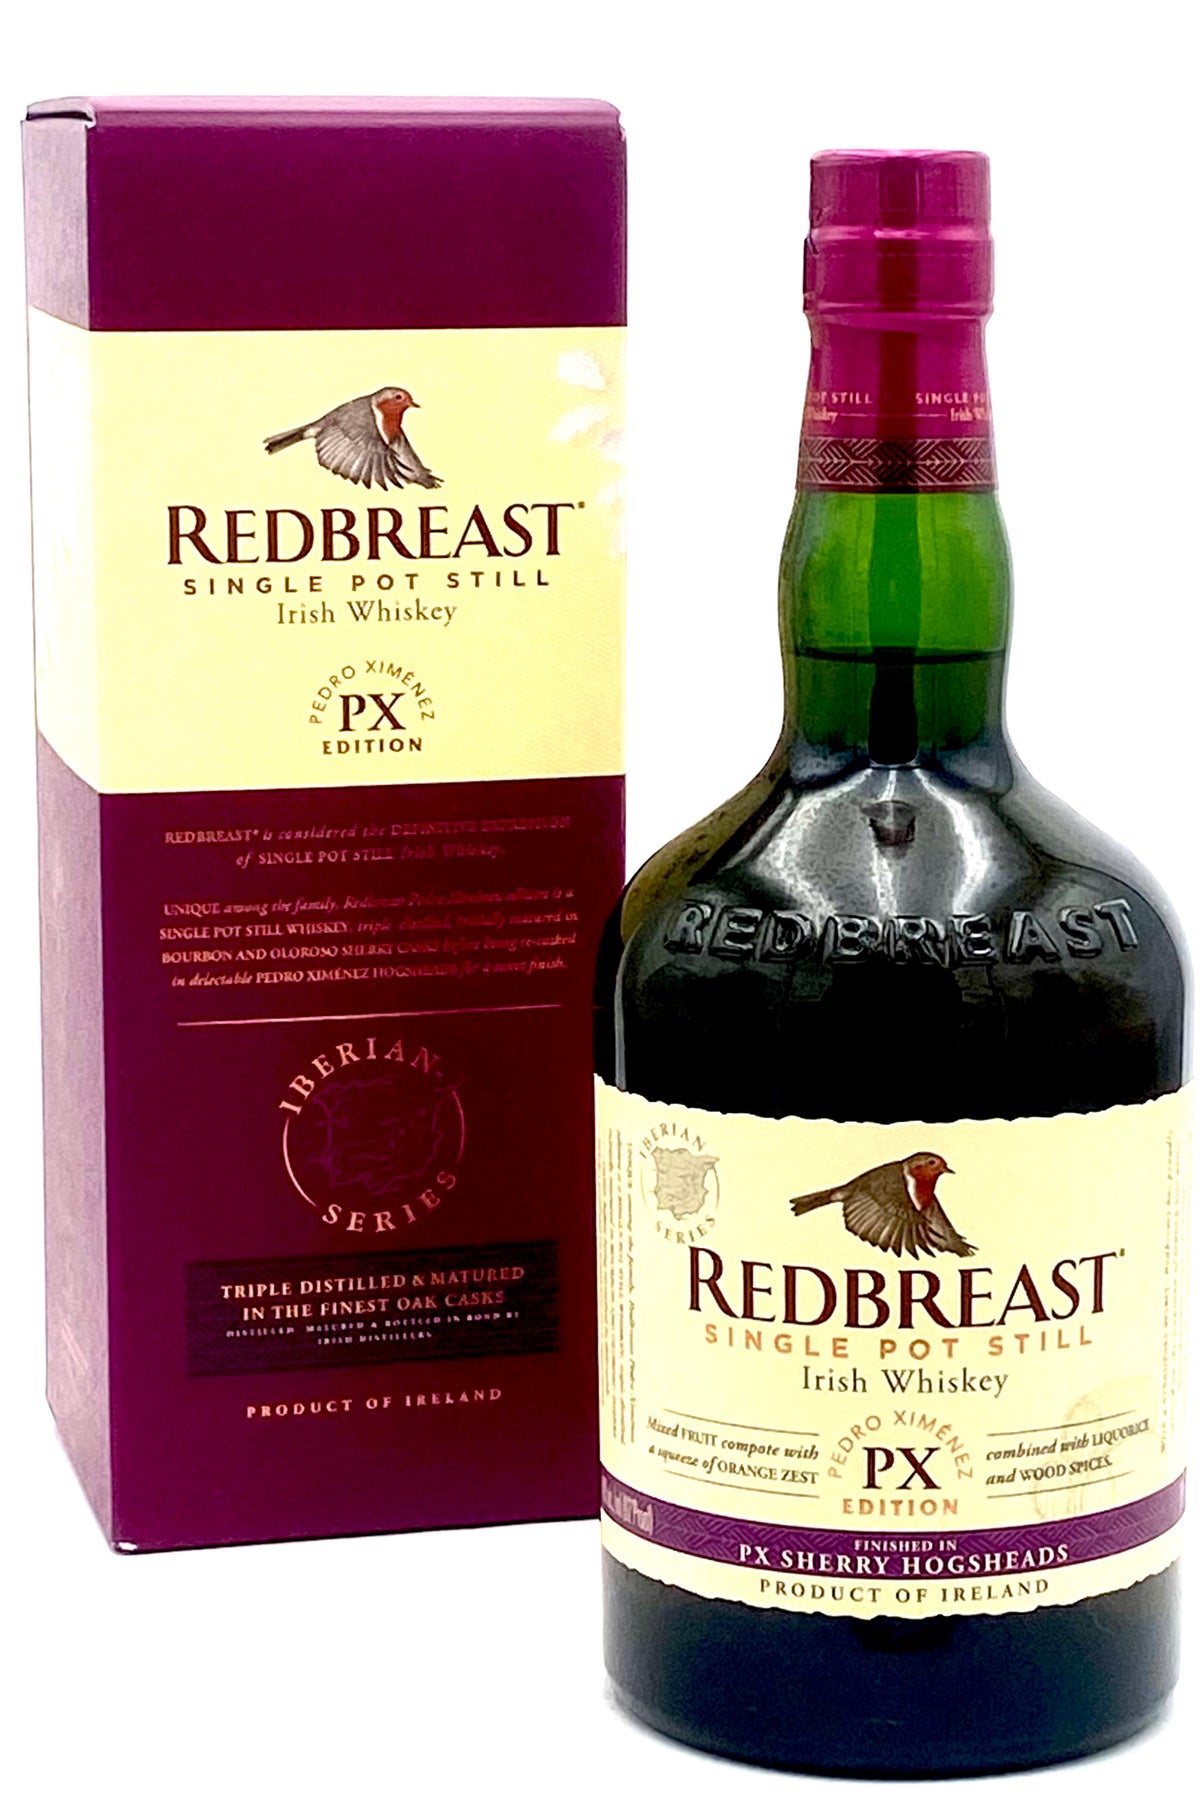 Redbreast Irish Single Pot Still Whiskey PX Sherry Cask Edition